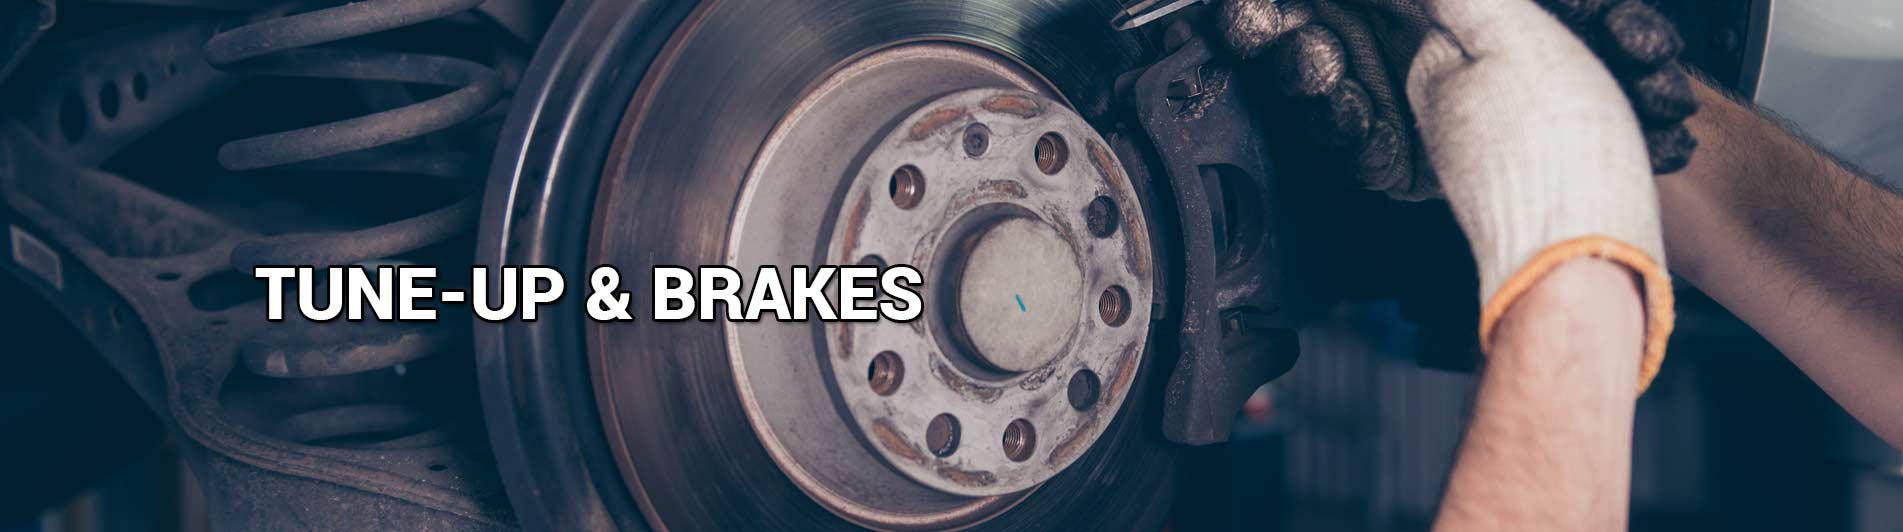 Tune-Up & Brakes